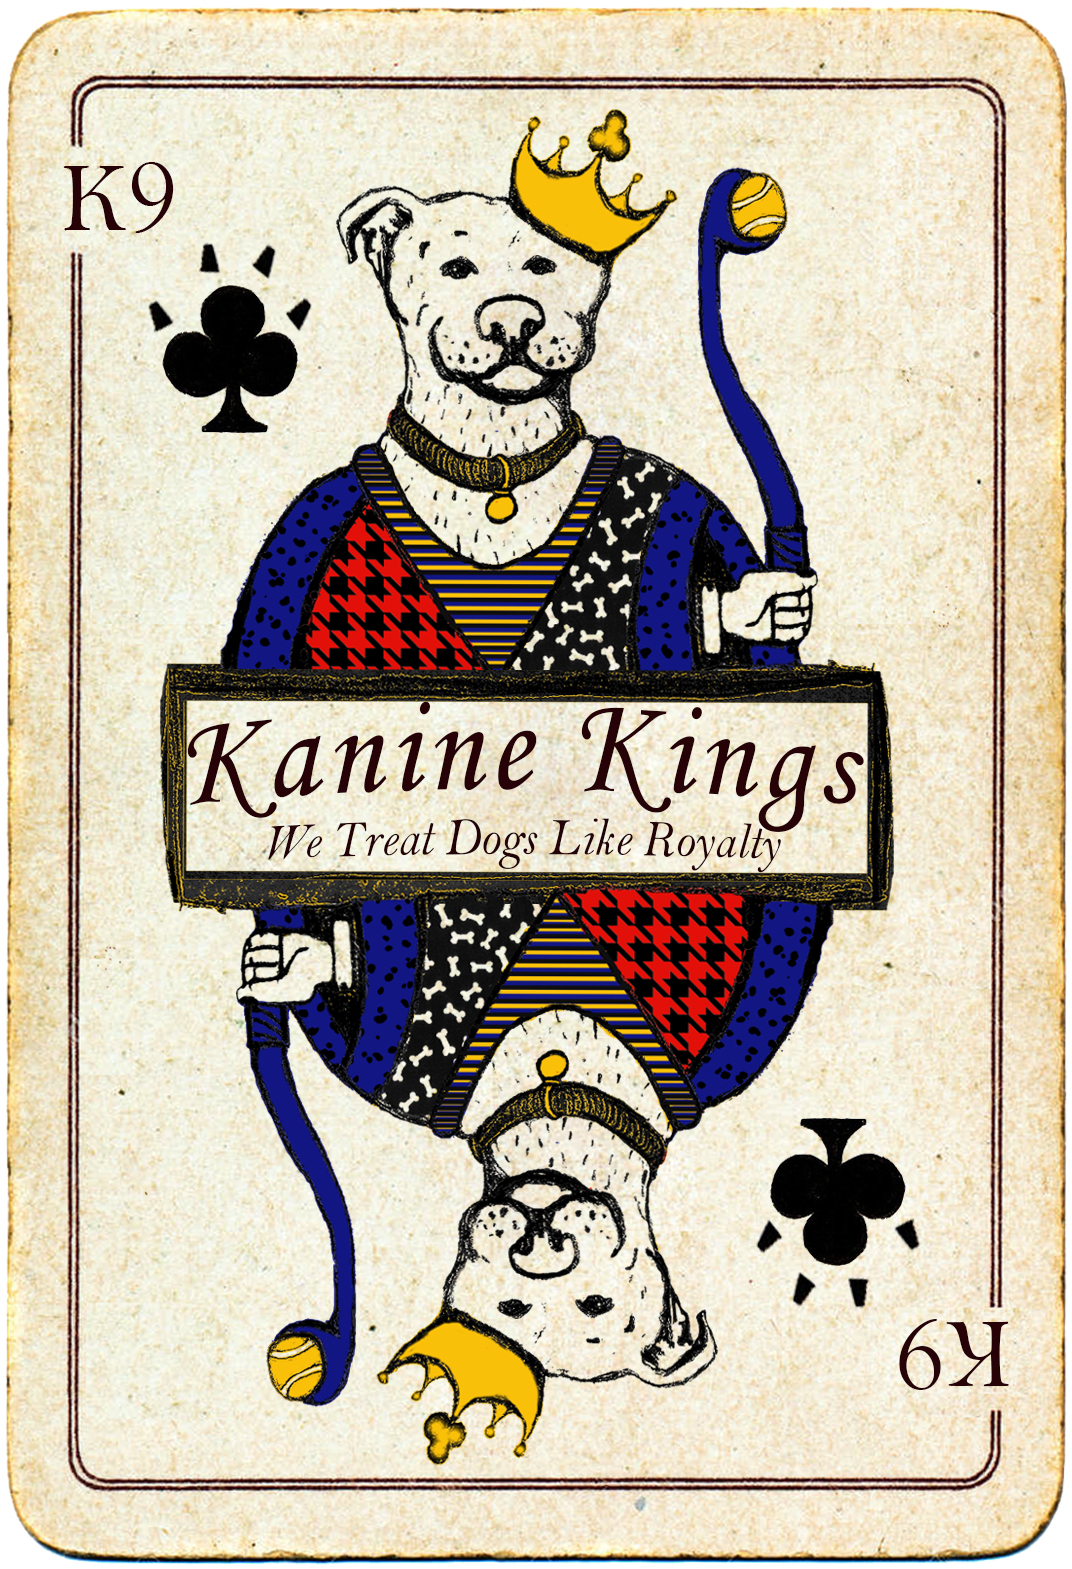 Kanine Kings